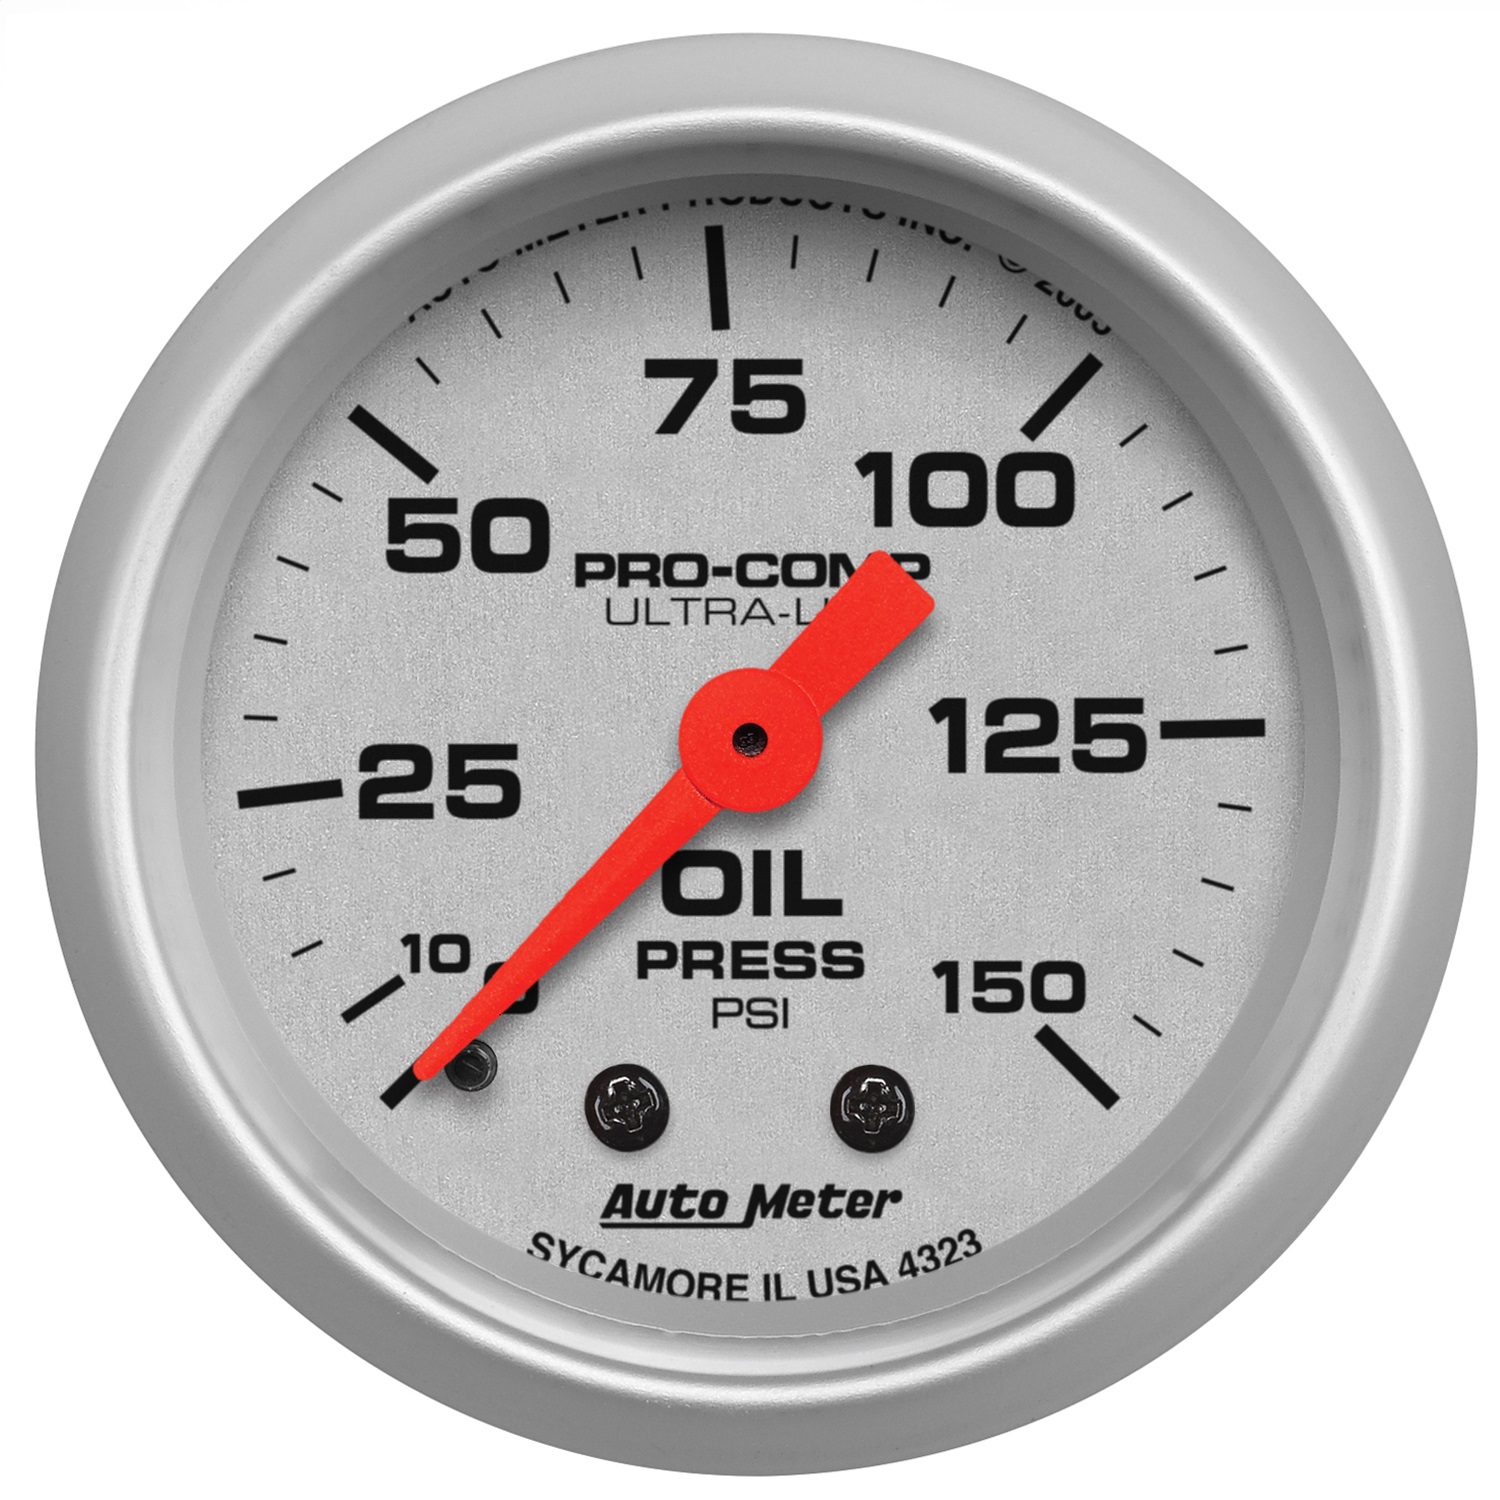 Auto Meter Auto Meter 4323 Ultra-Lite; Mechanical Oil Pressure Gauge